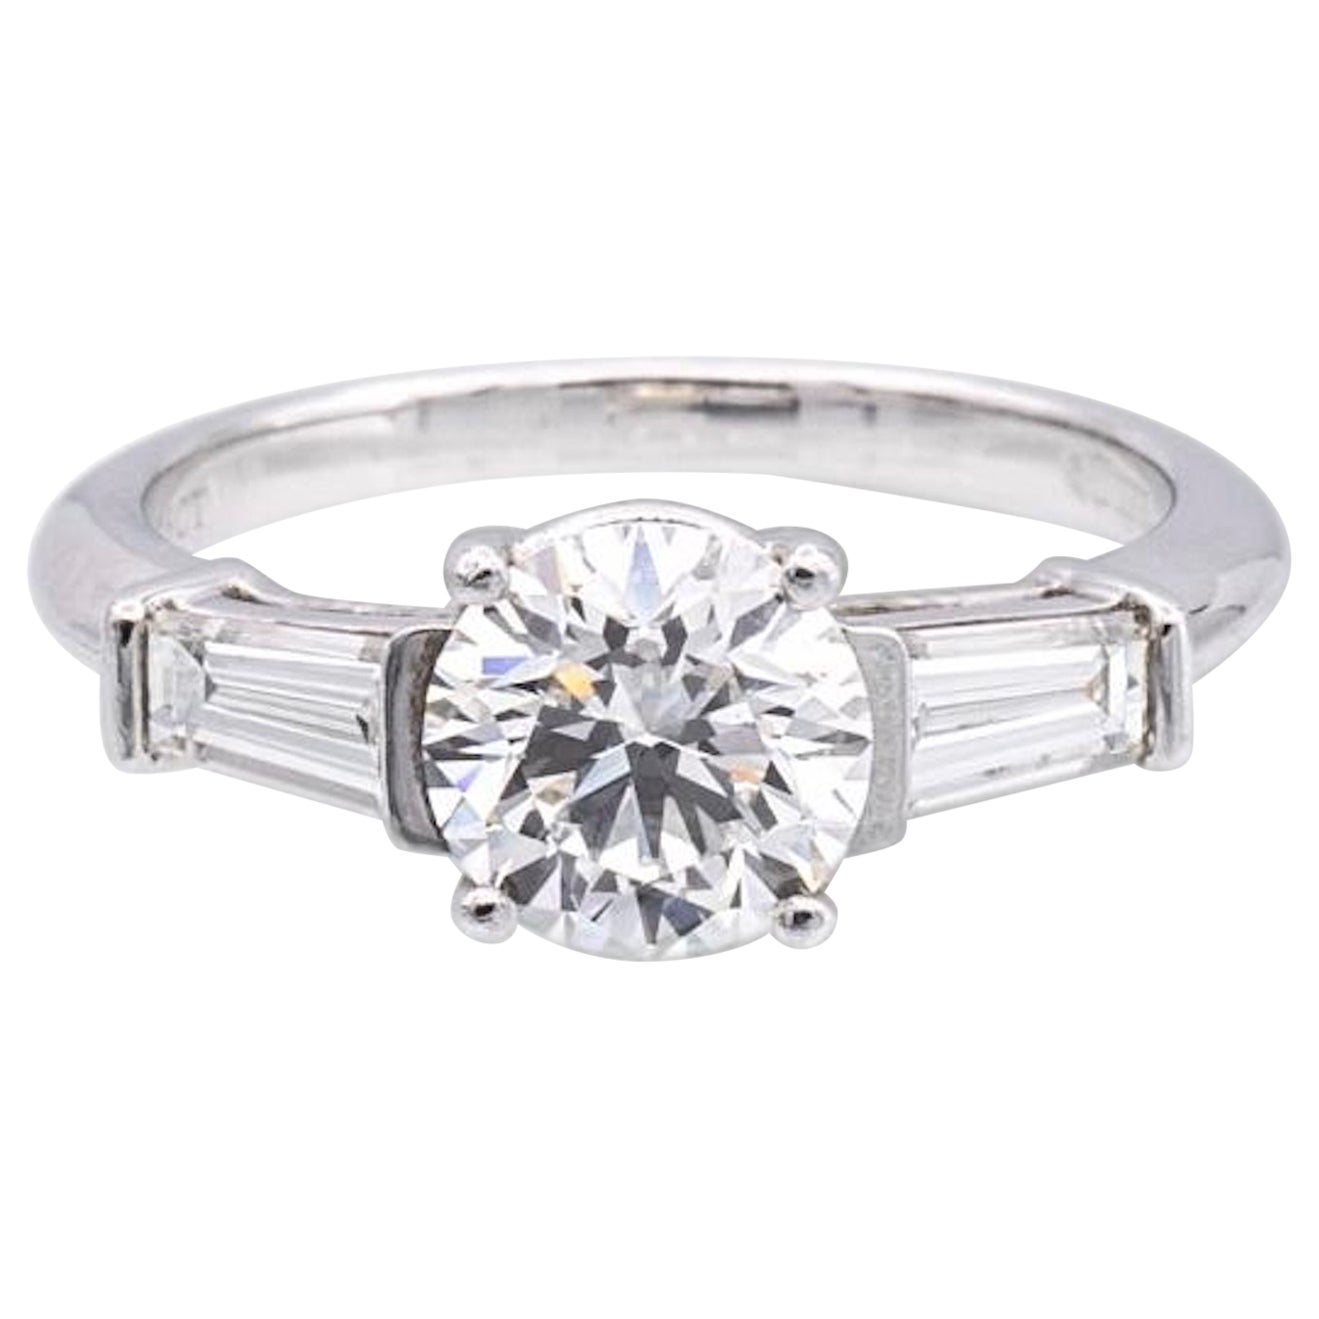 Tiffany & Co. Platinum Round Diamond Engagement Ring w/ Baguettes 1.26Ct IVS1